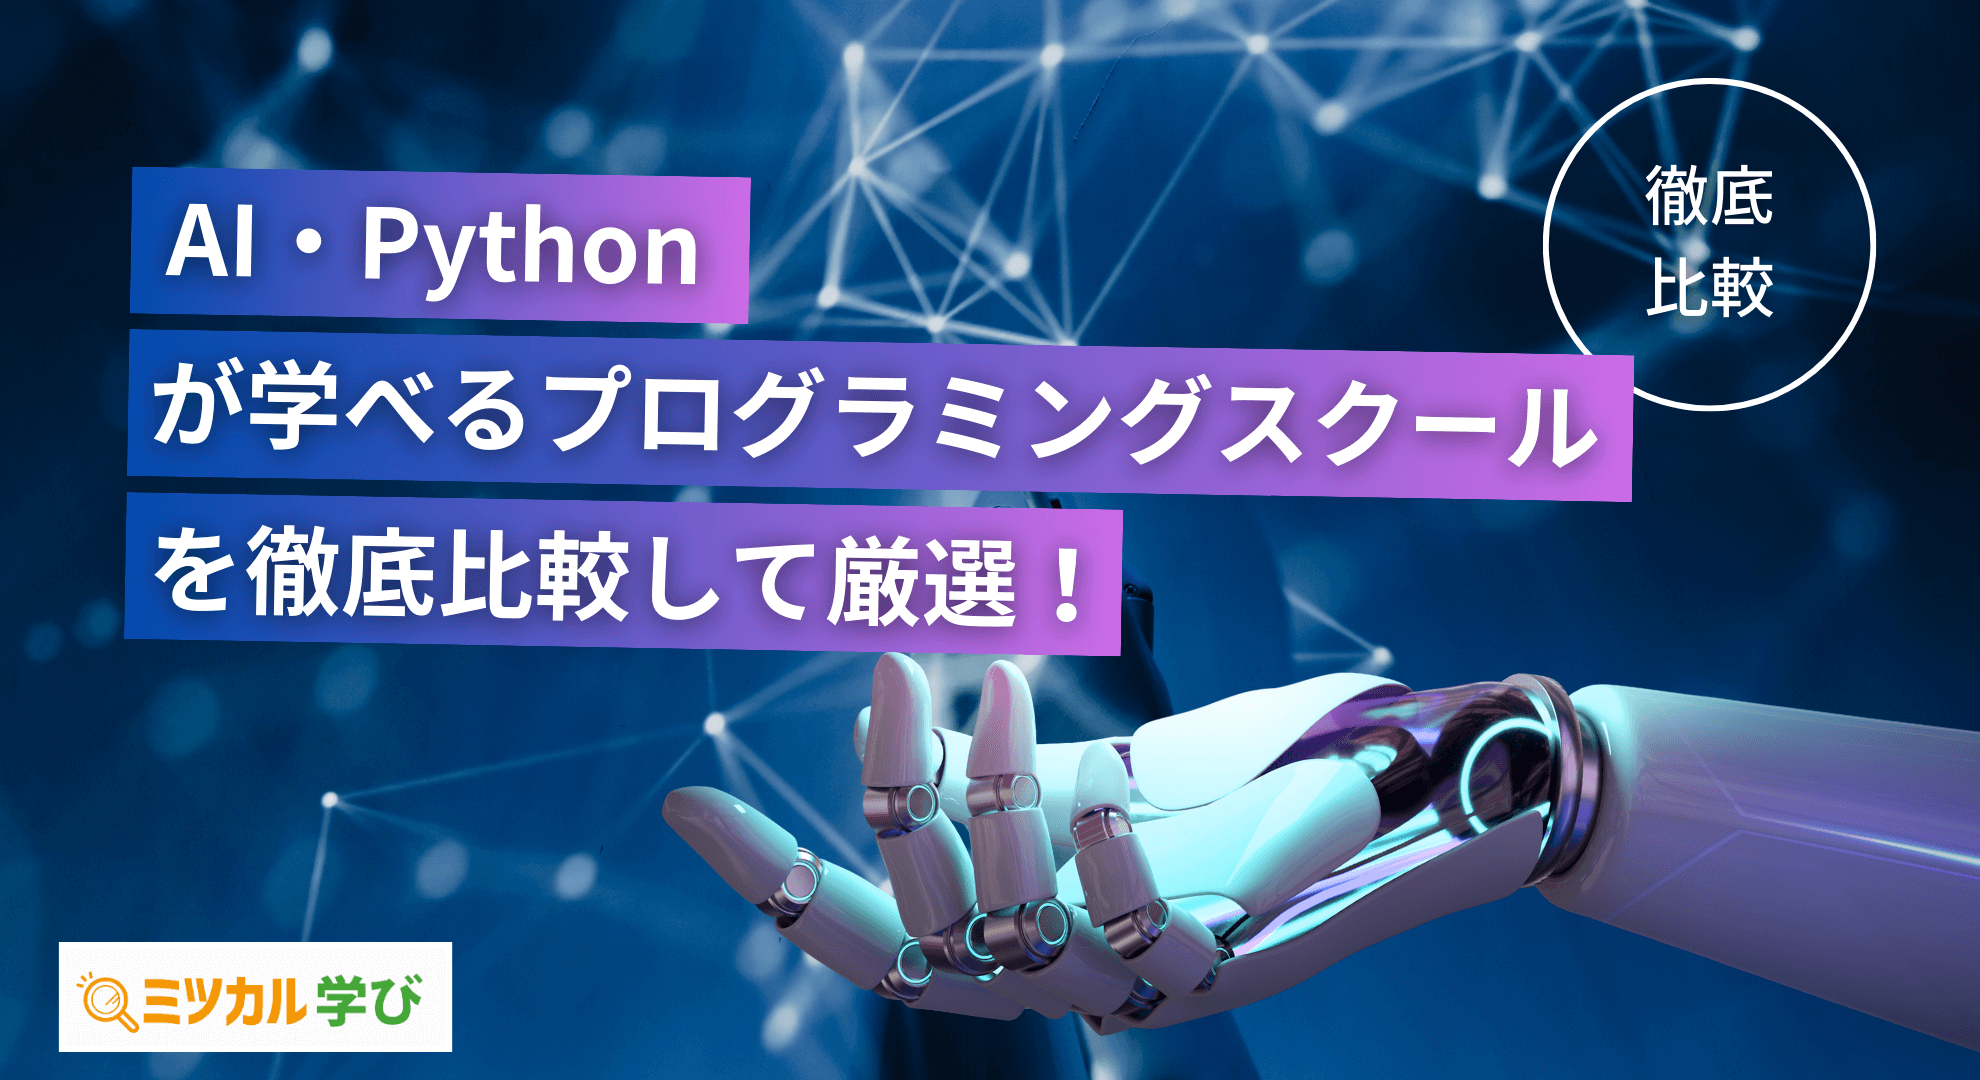 Python・AIが学べるプログラミングスクールを厳選して紹介